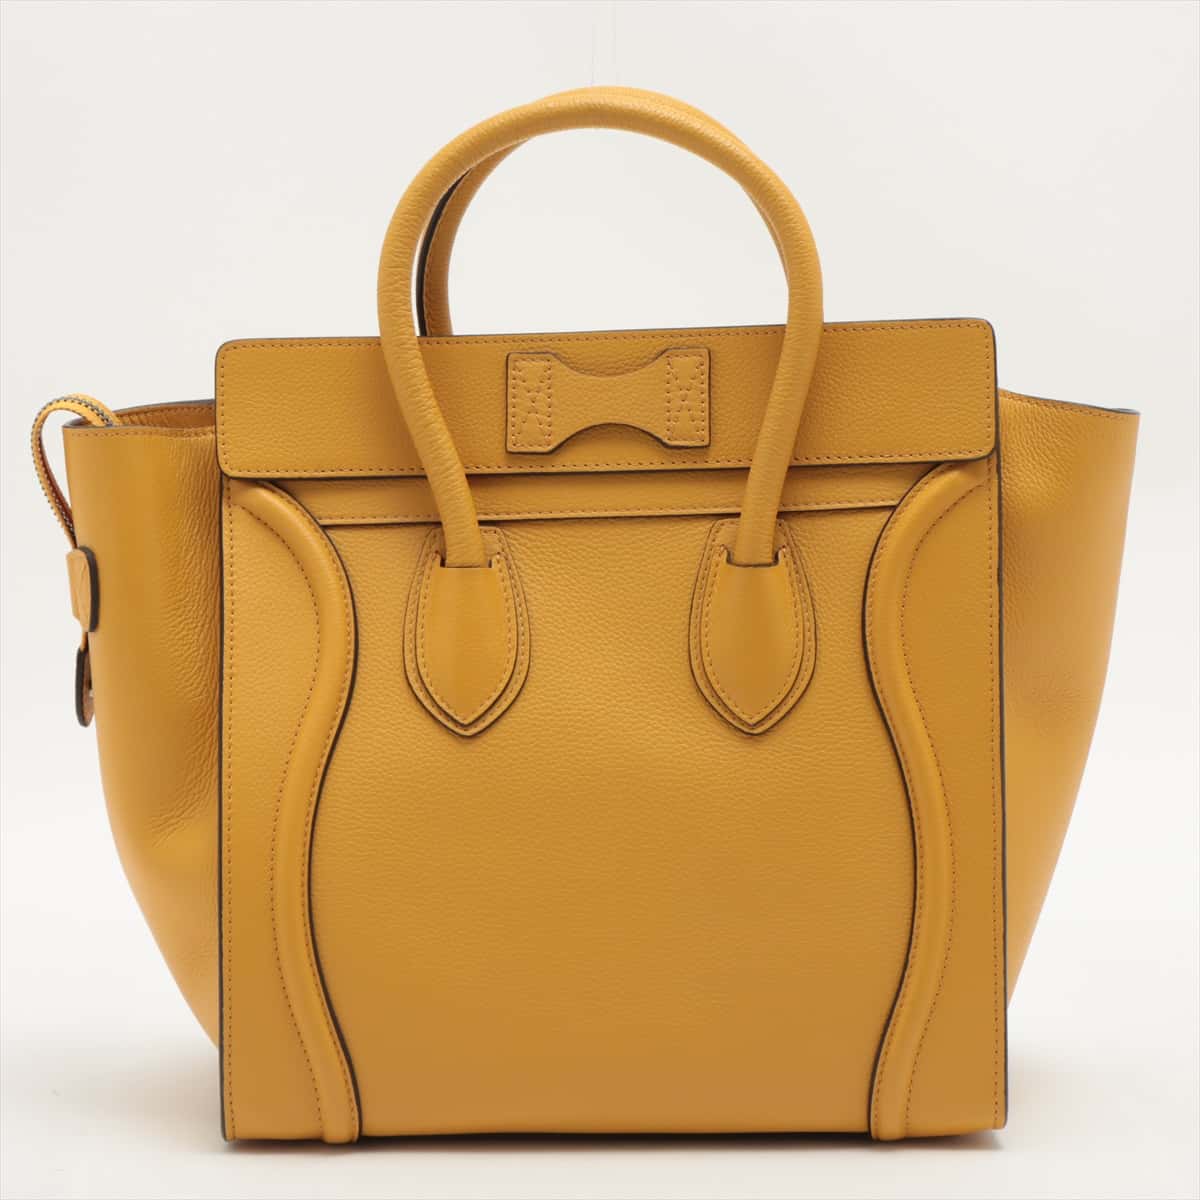 CELINE Luggage Mini Leather Hand bag Yellow